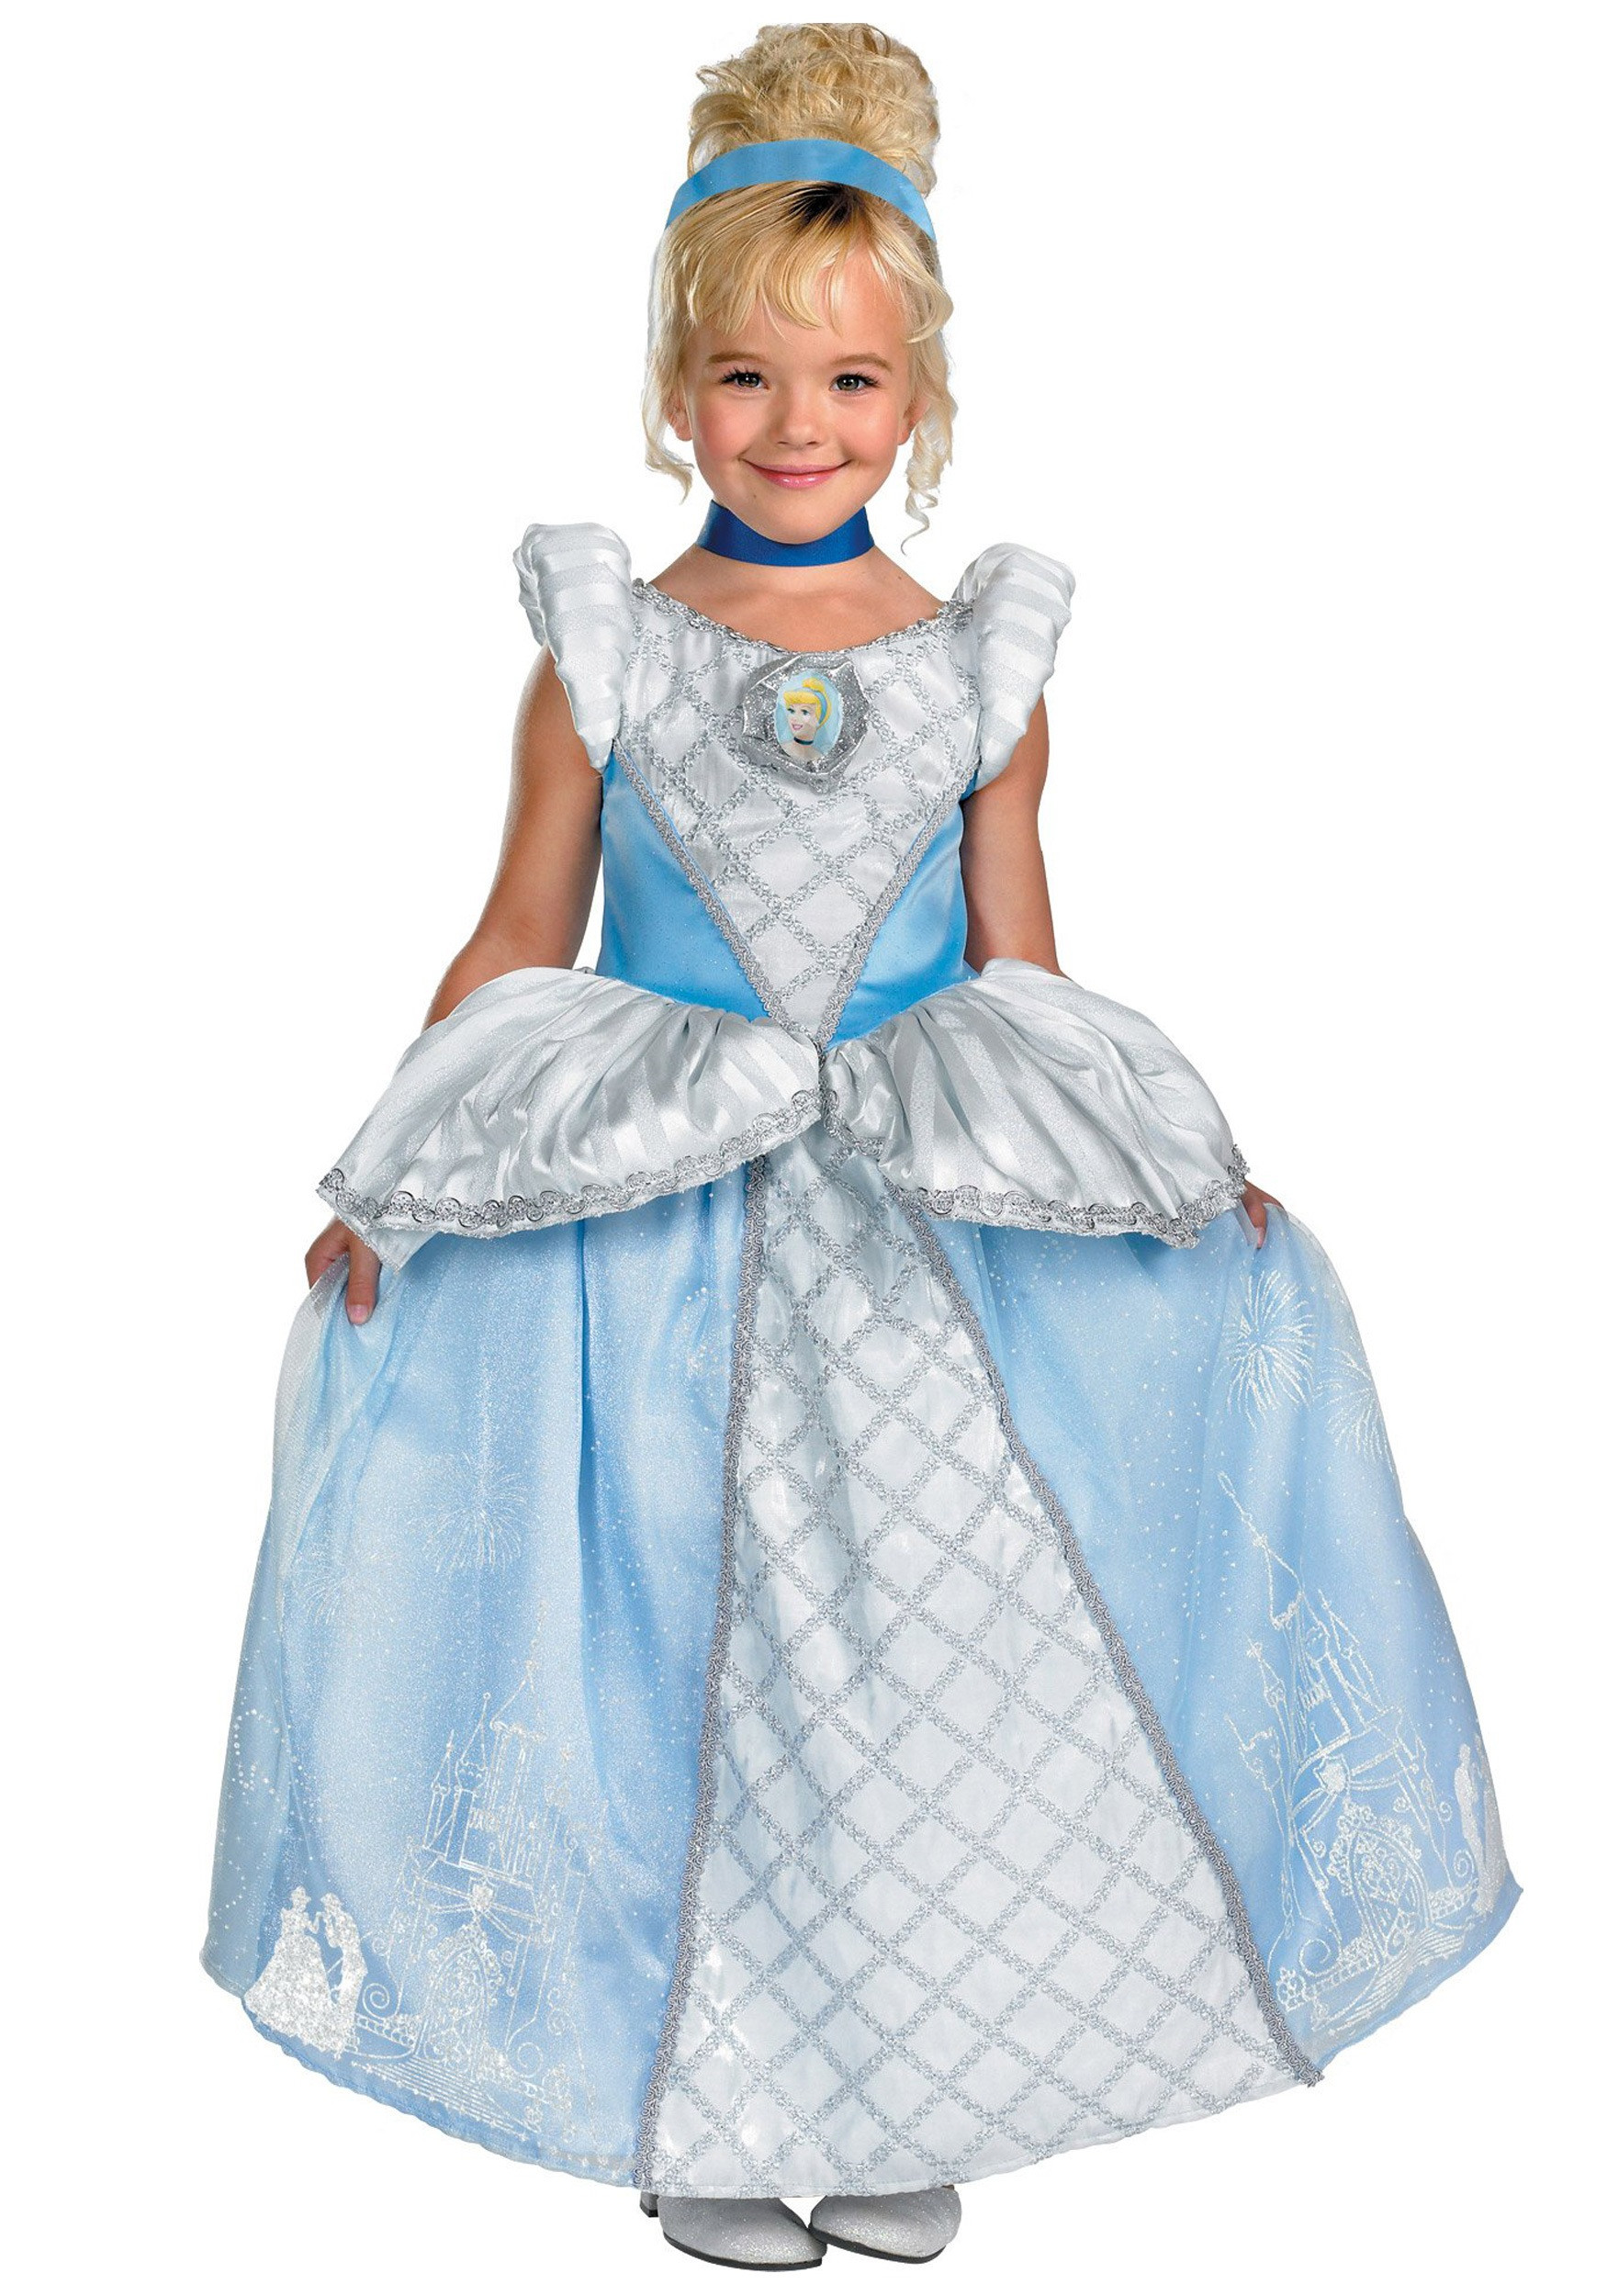 Cinderella DIY Costumes
 Girl s Cinderella Ultra Prestige Costume